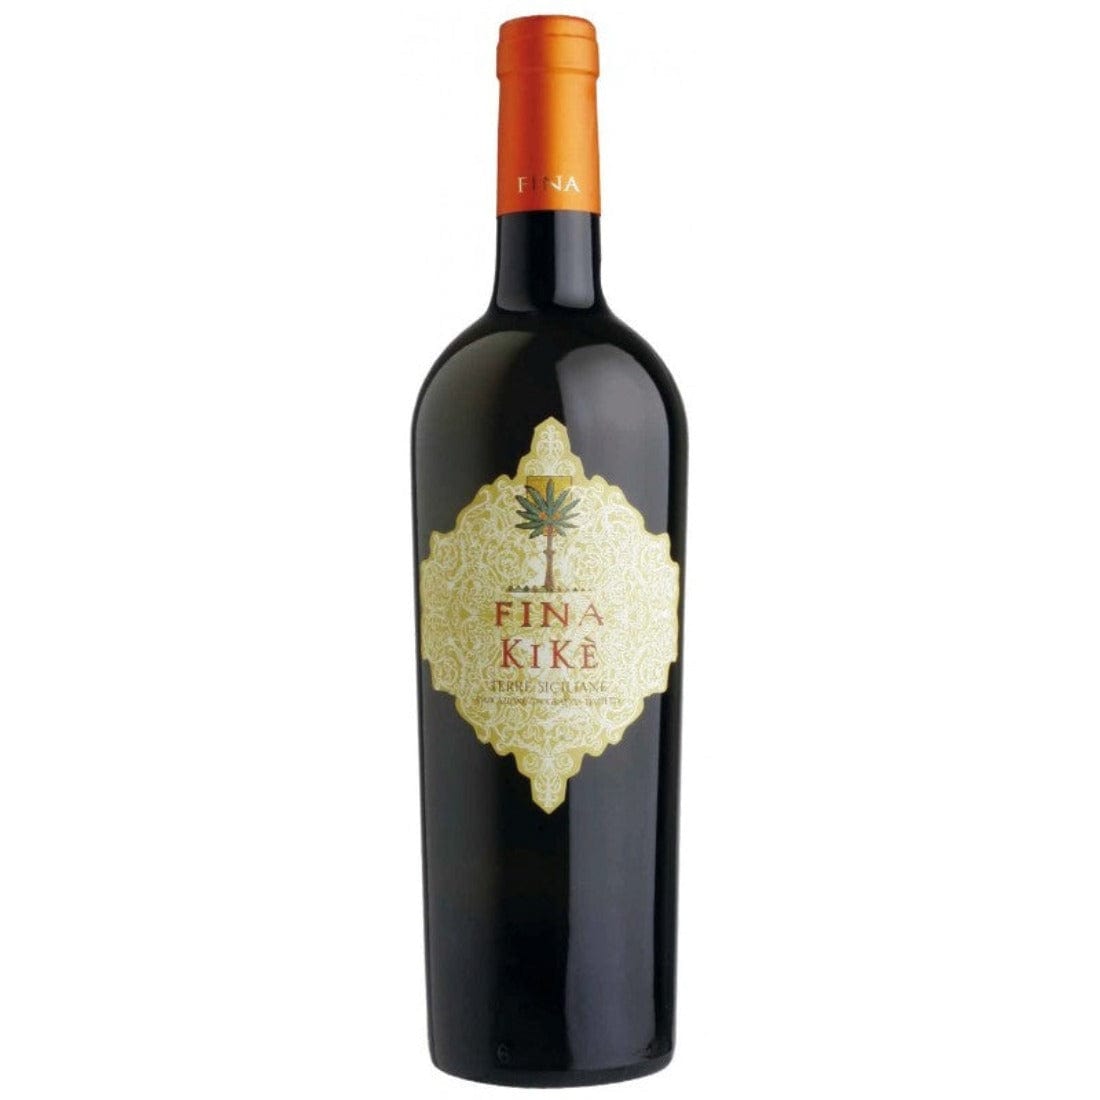 Kikè 2022 IGTTerre Siciliane Traminer Aromatico Sauvignon Blanc - Cantine Fina-Vinolog24.com